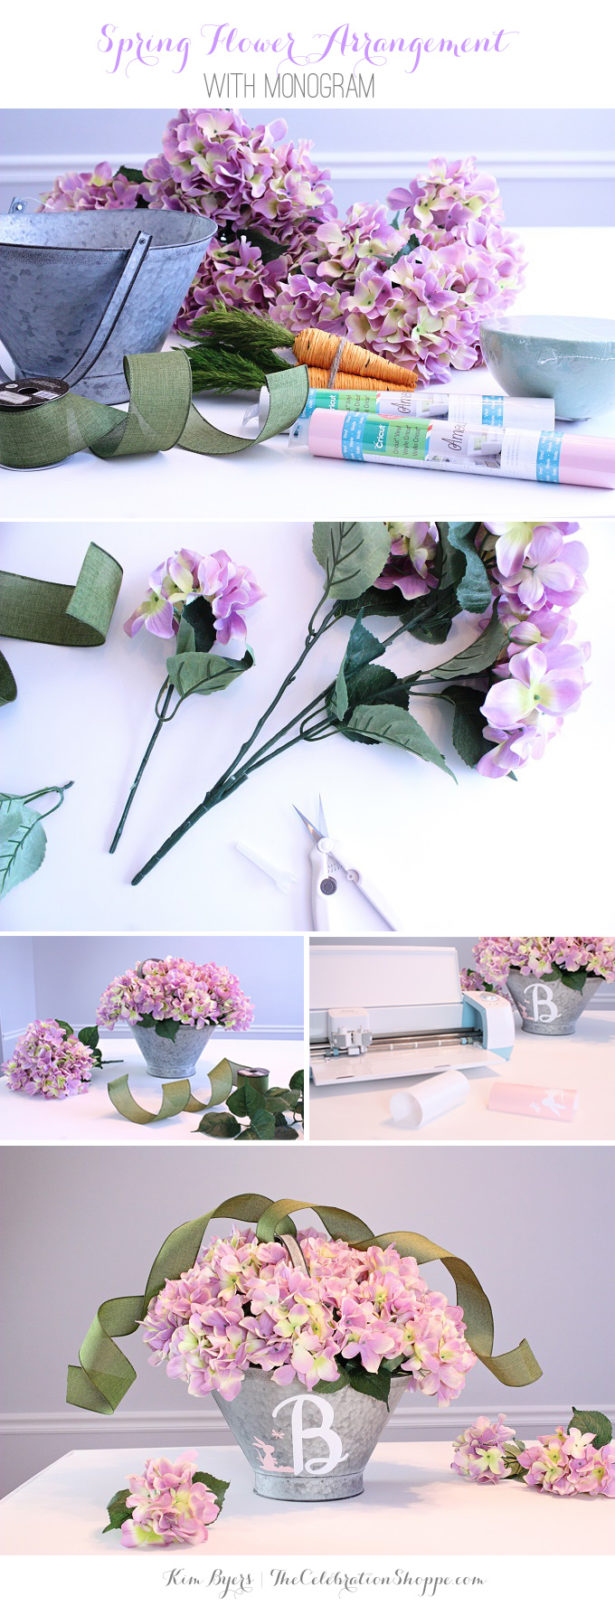 2-DIY-Monogram-Spring-Flower-Arrangement-Kim-Byers